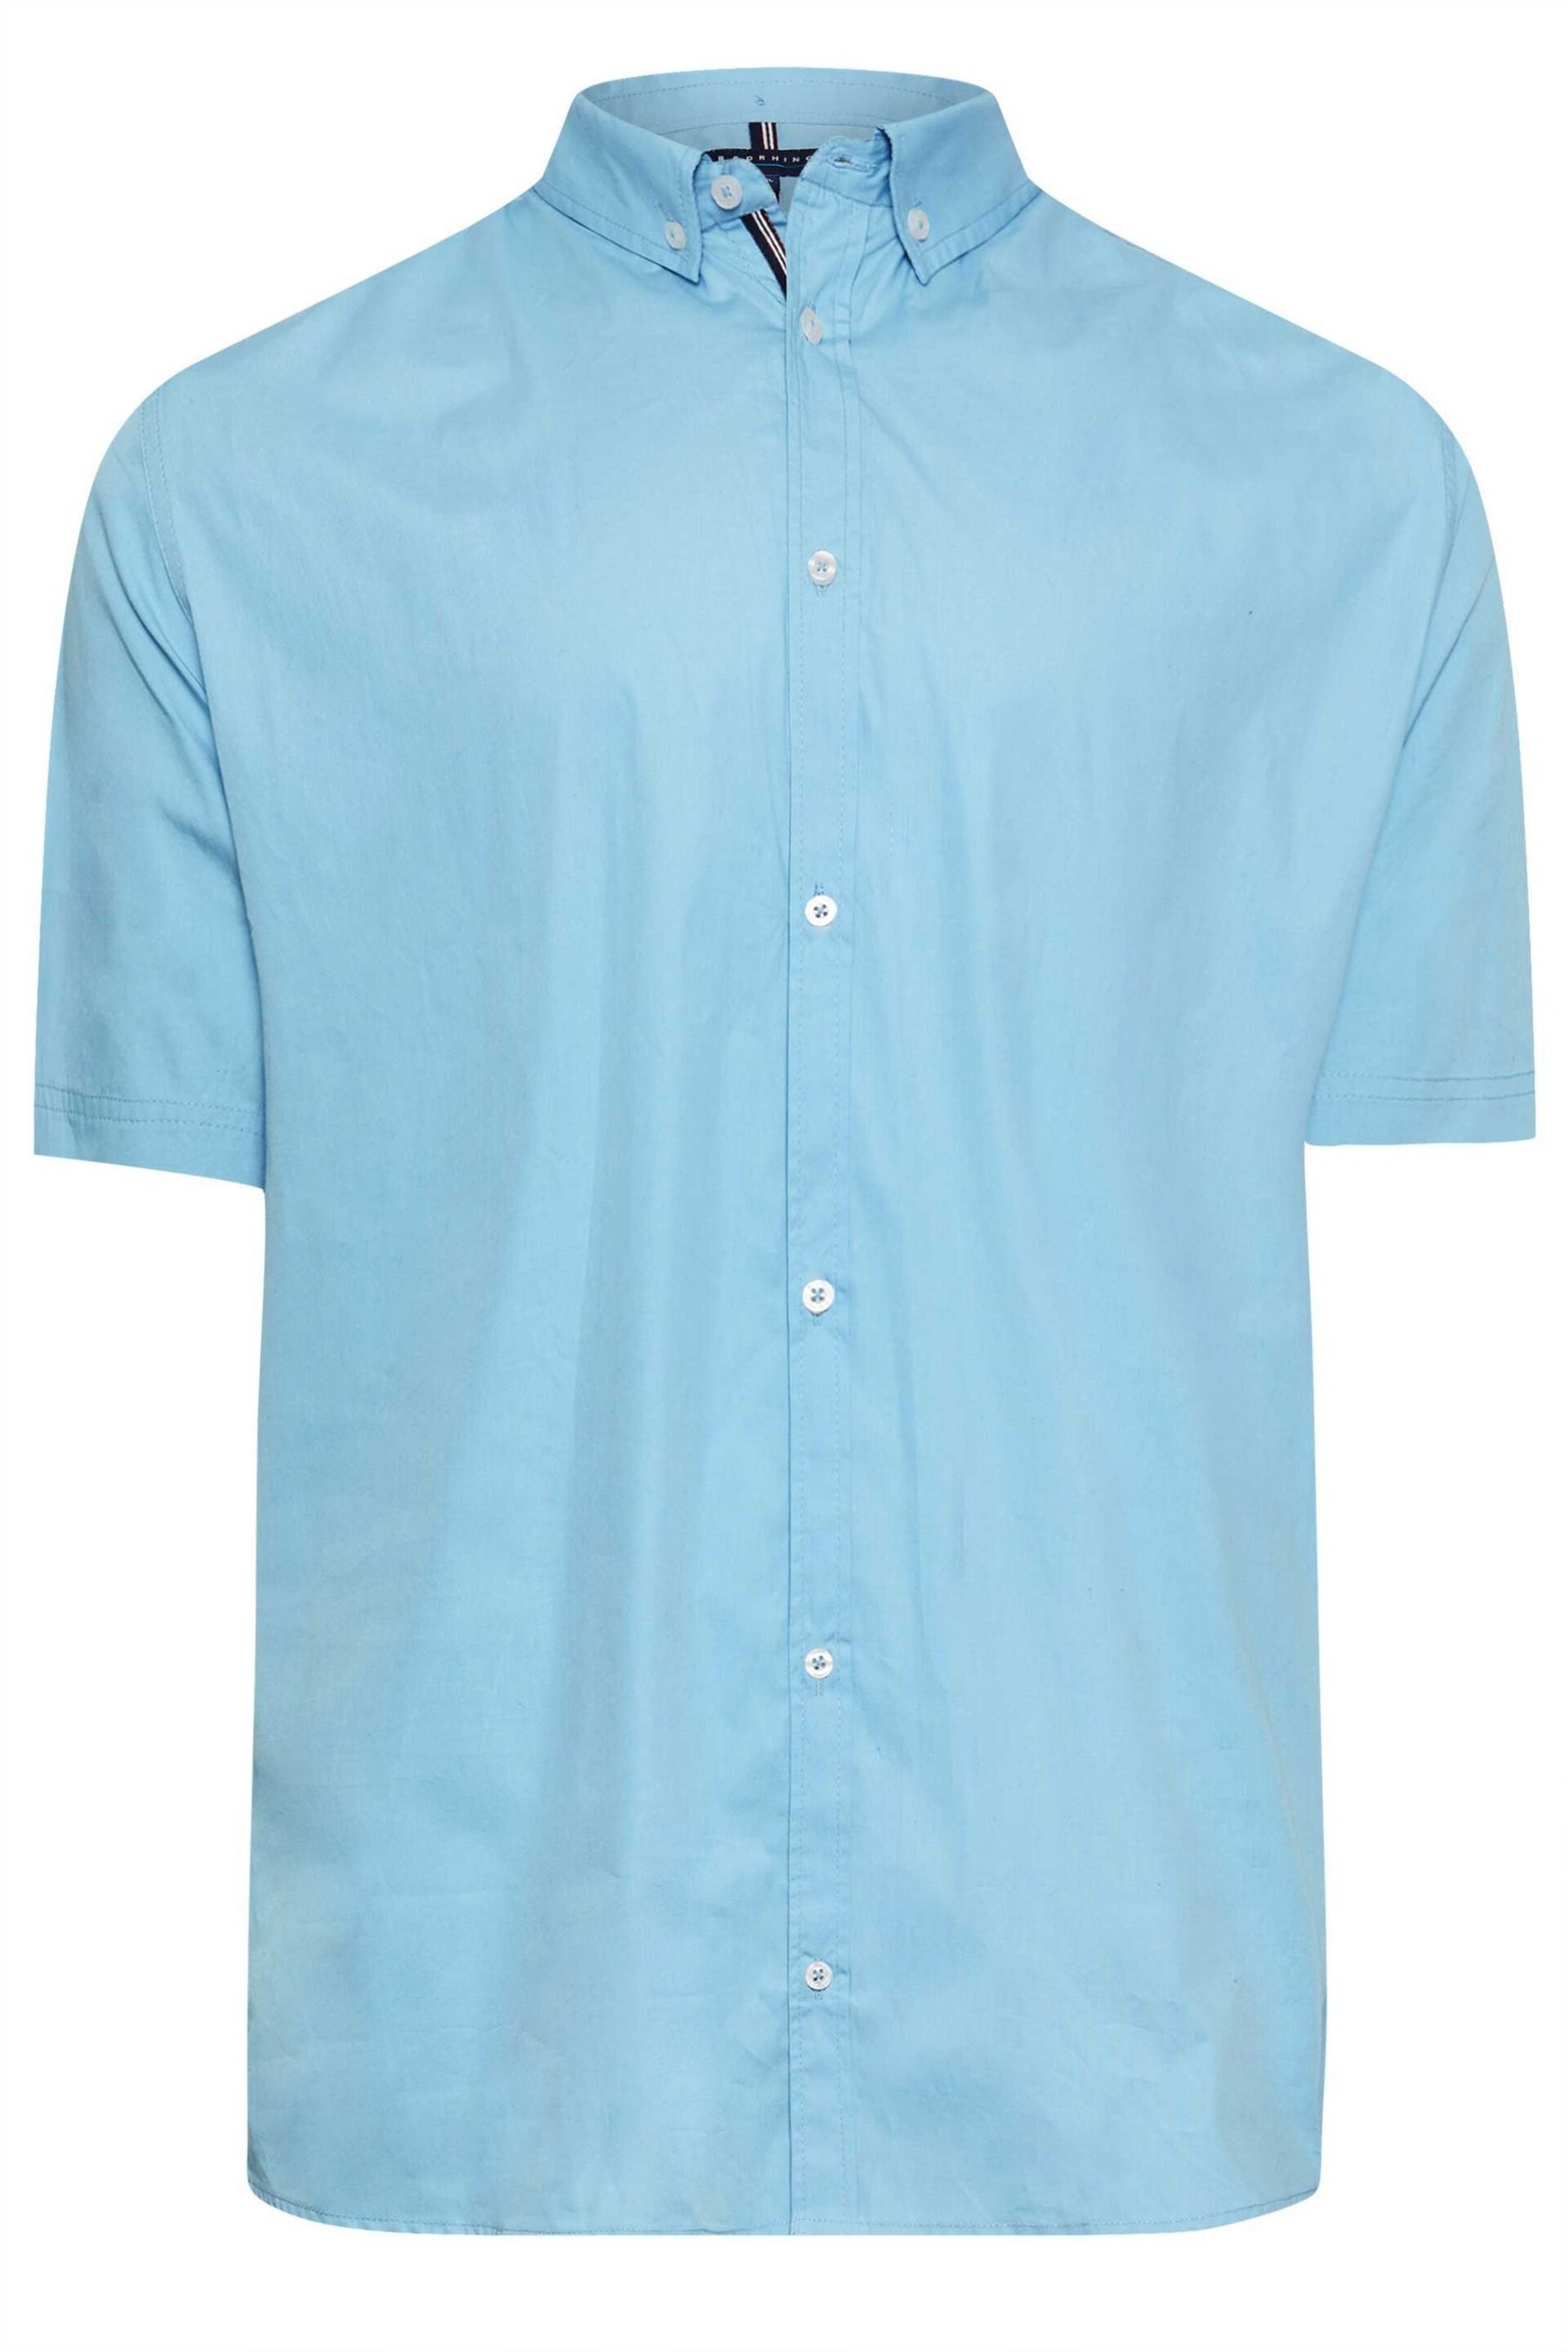 BadRhino Big & Tall Light Blue Short Sleeve Poplin Shirt - Image 2 of 3